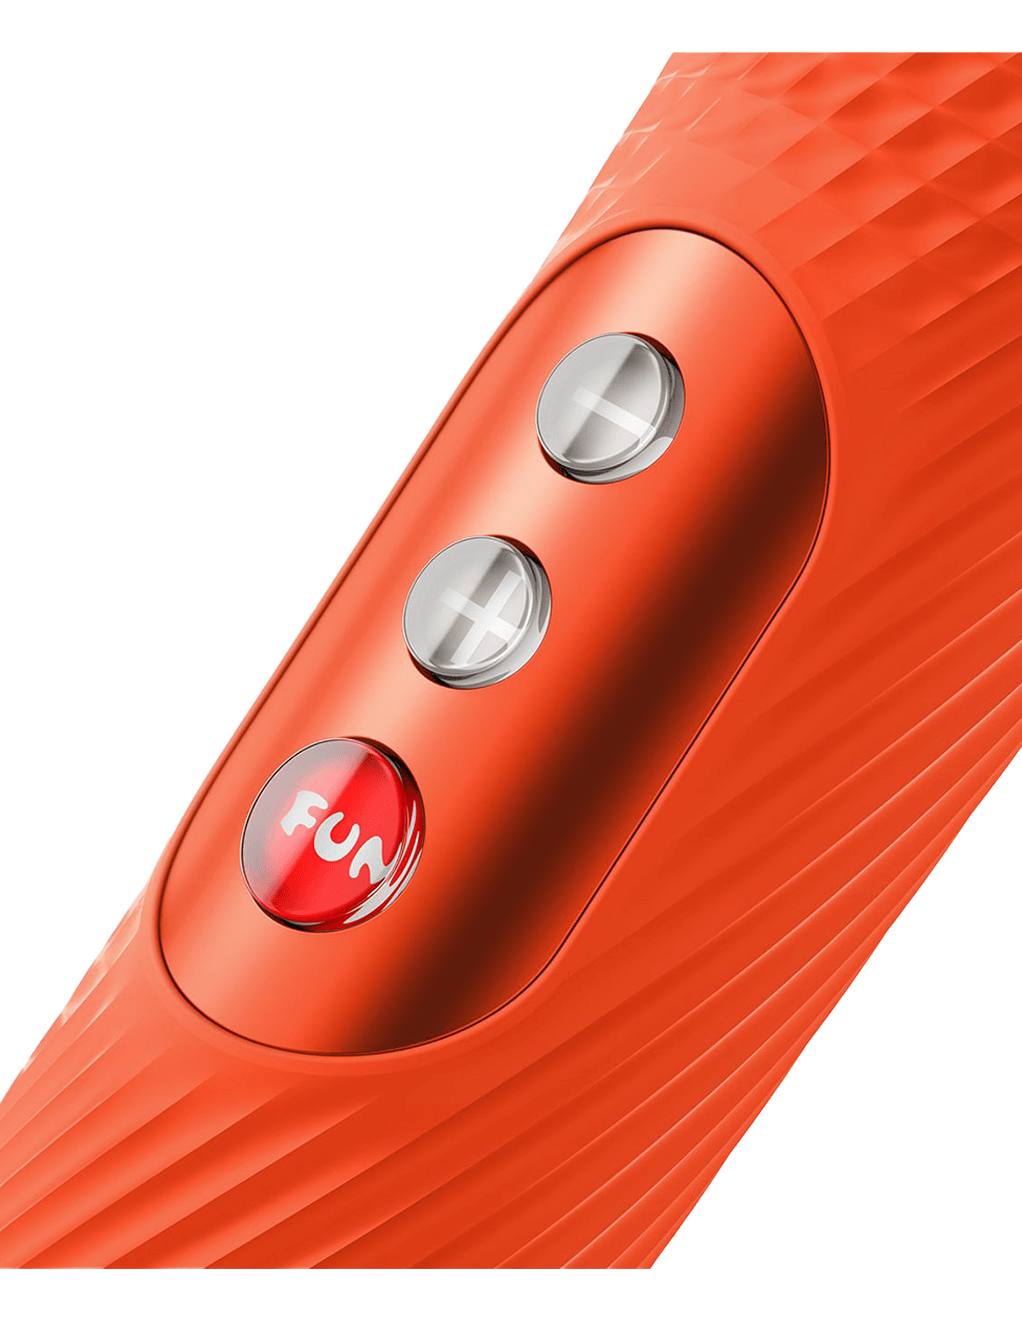 Fun Factory Vim -Sunrise Orange - Control Button Detail